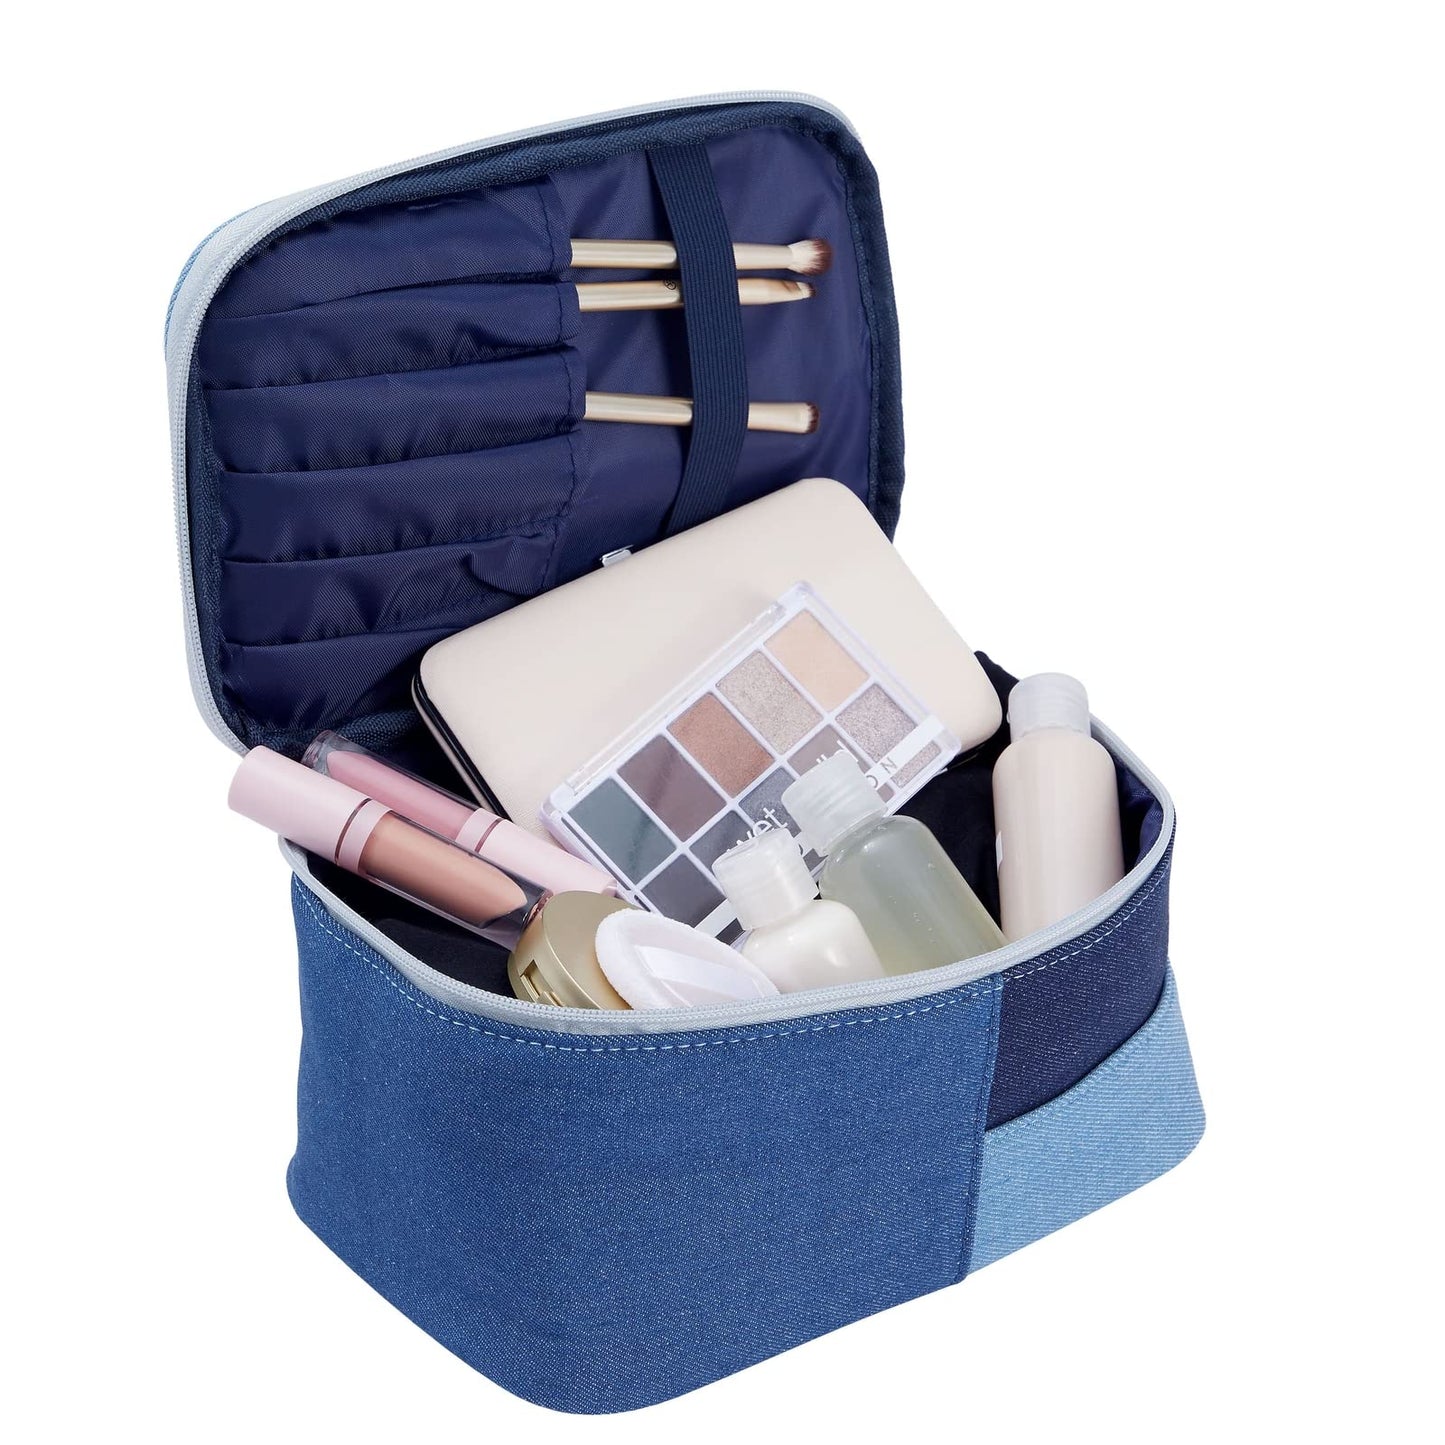 Glamlily 3-Piece Retro Jean Cosmetic Makeup Bag Set For Travel, Beauty Organization, Cotton Denim (3 Sizes: Large, Medium, Small)